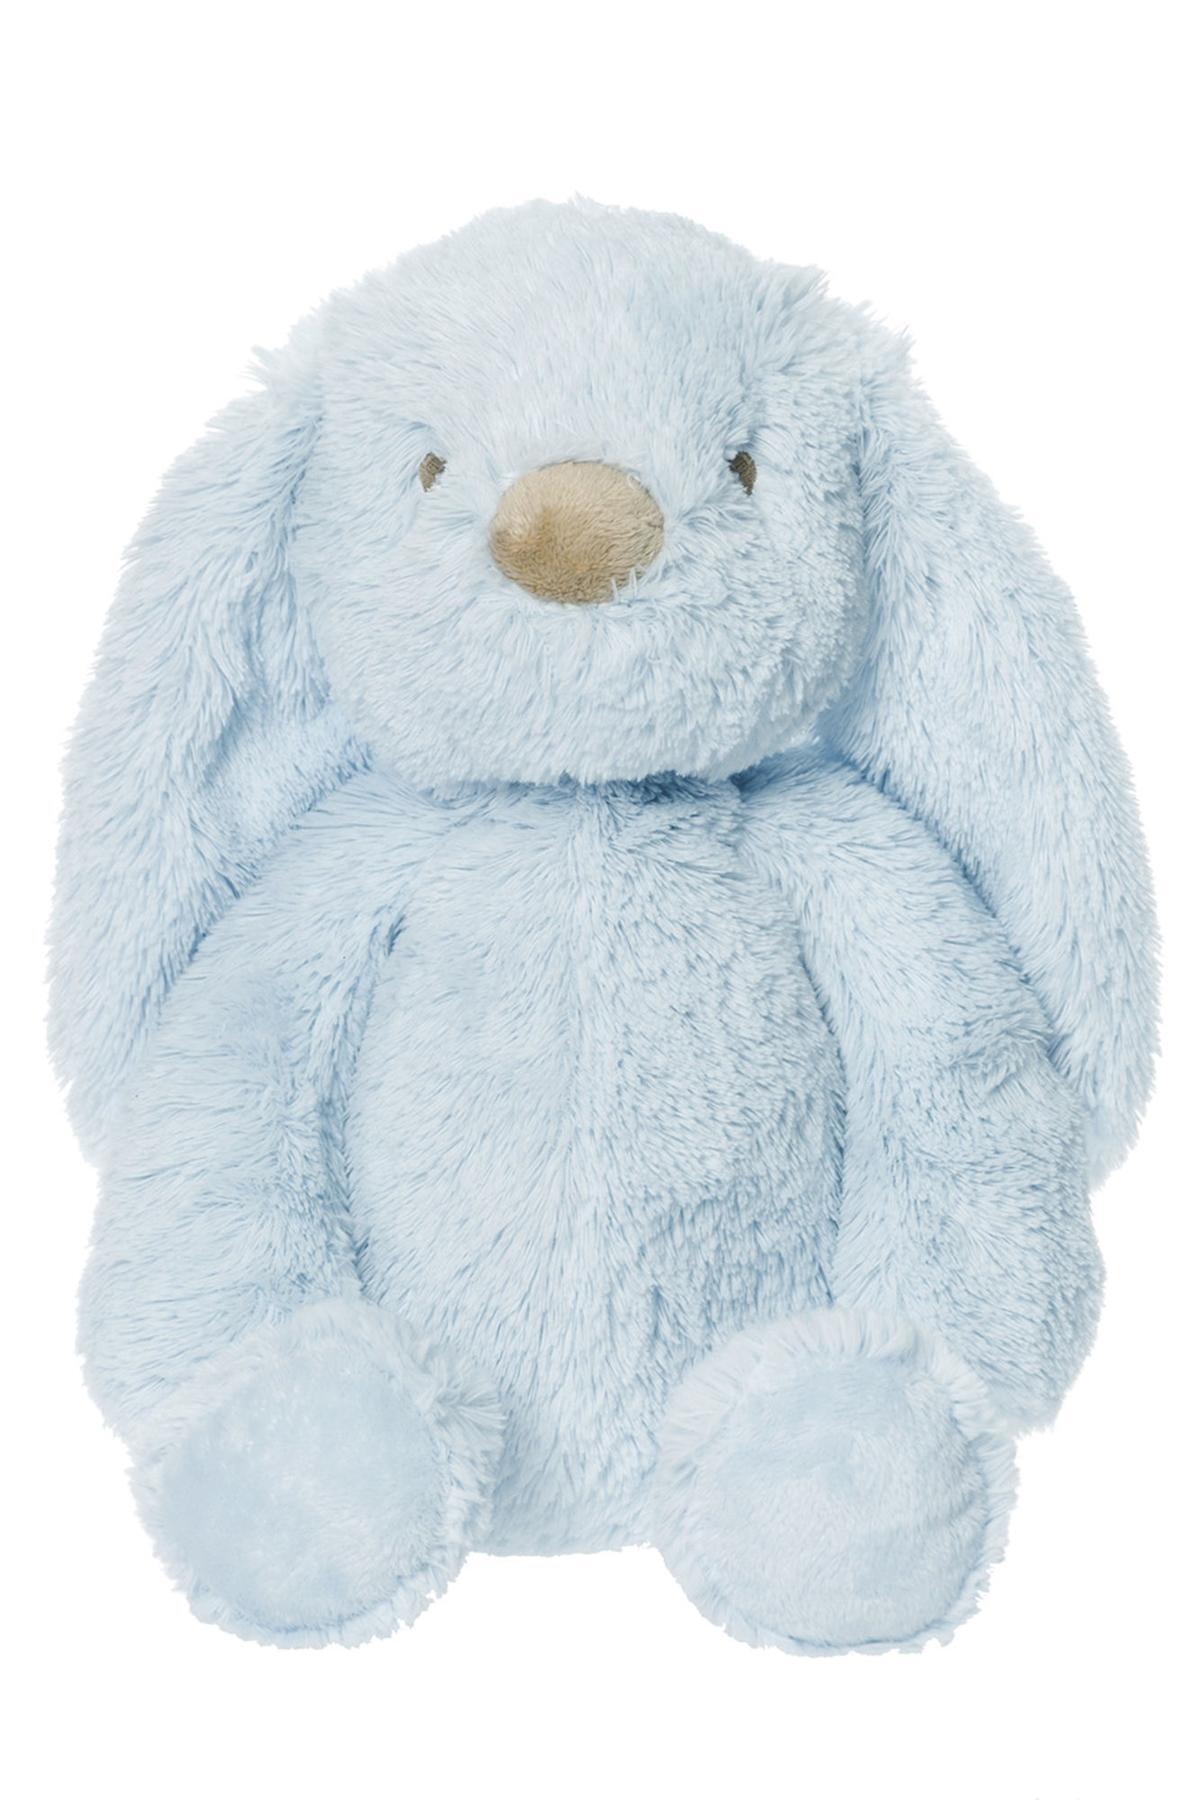 Teddykompaniet soft toy Lolli Bunnies blue - Teddykompaniet